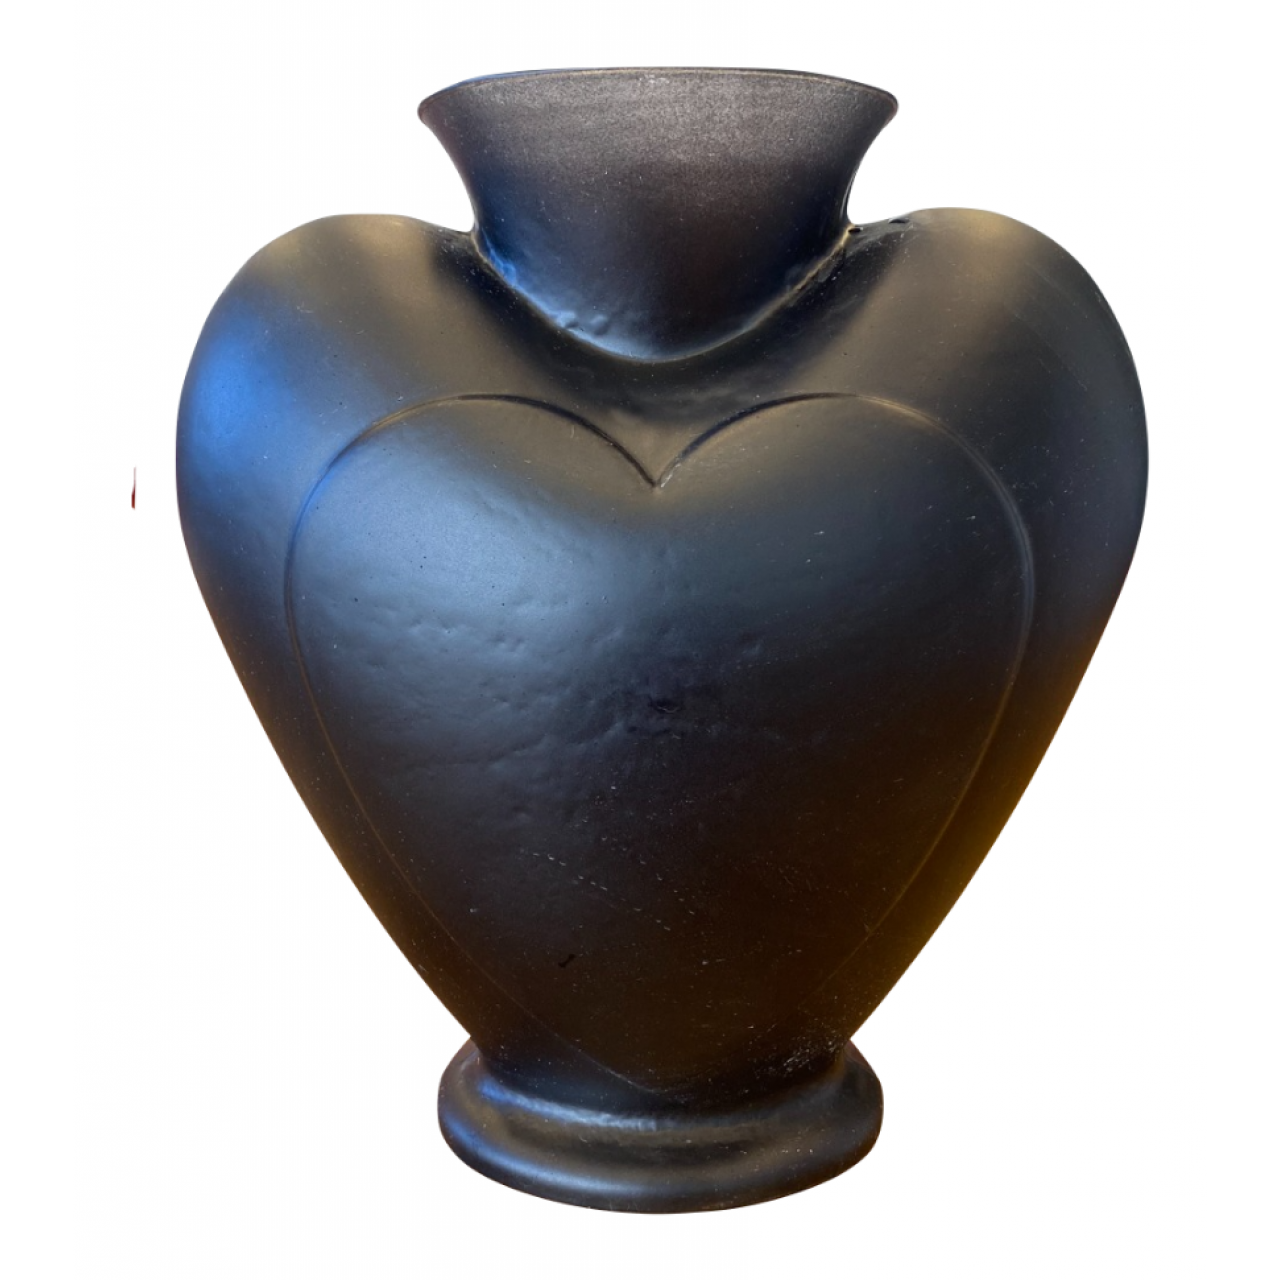 Kalp Cam Vazo (Sepette Renk Seçeneği)